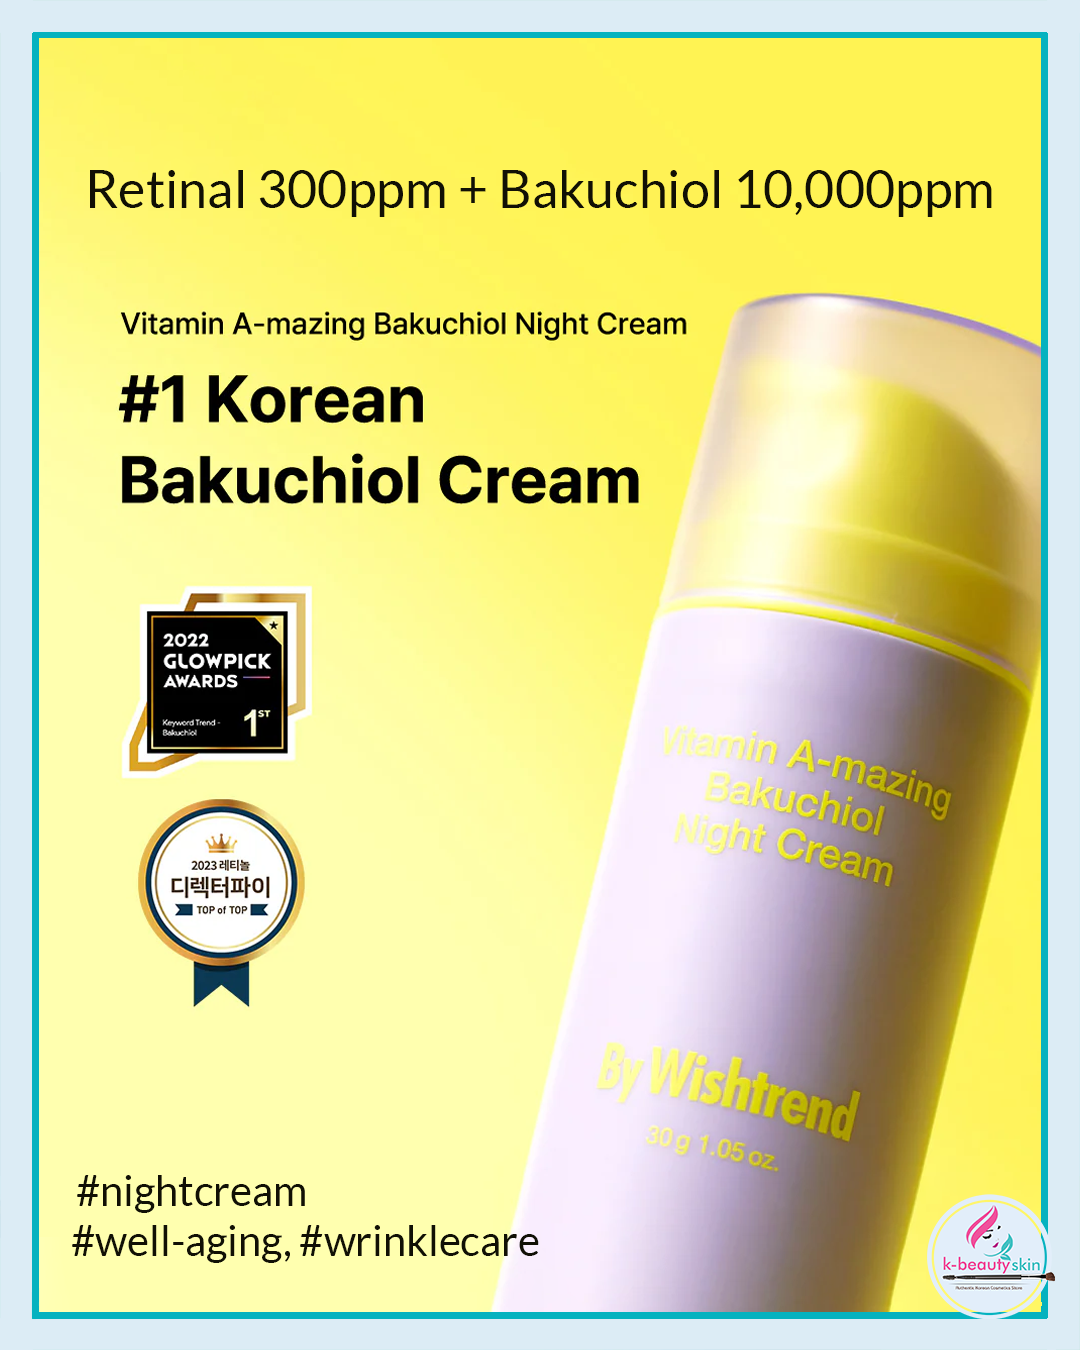 Contains bakuchiol, a natural alternative to retinol, for anti-aging benefits- BY WISHTREND Vitamin A-mazing Bakuchiol Night Cream 30g